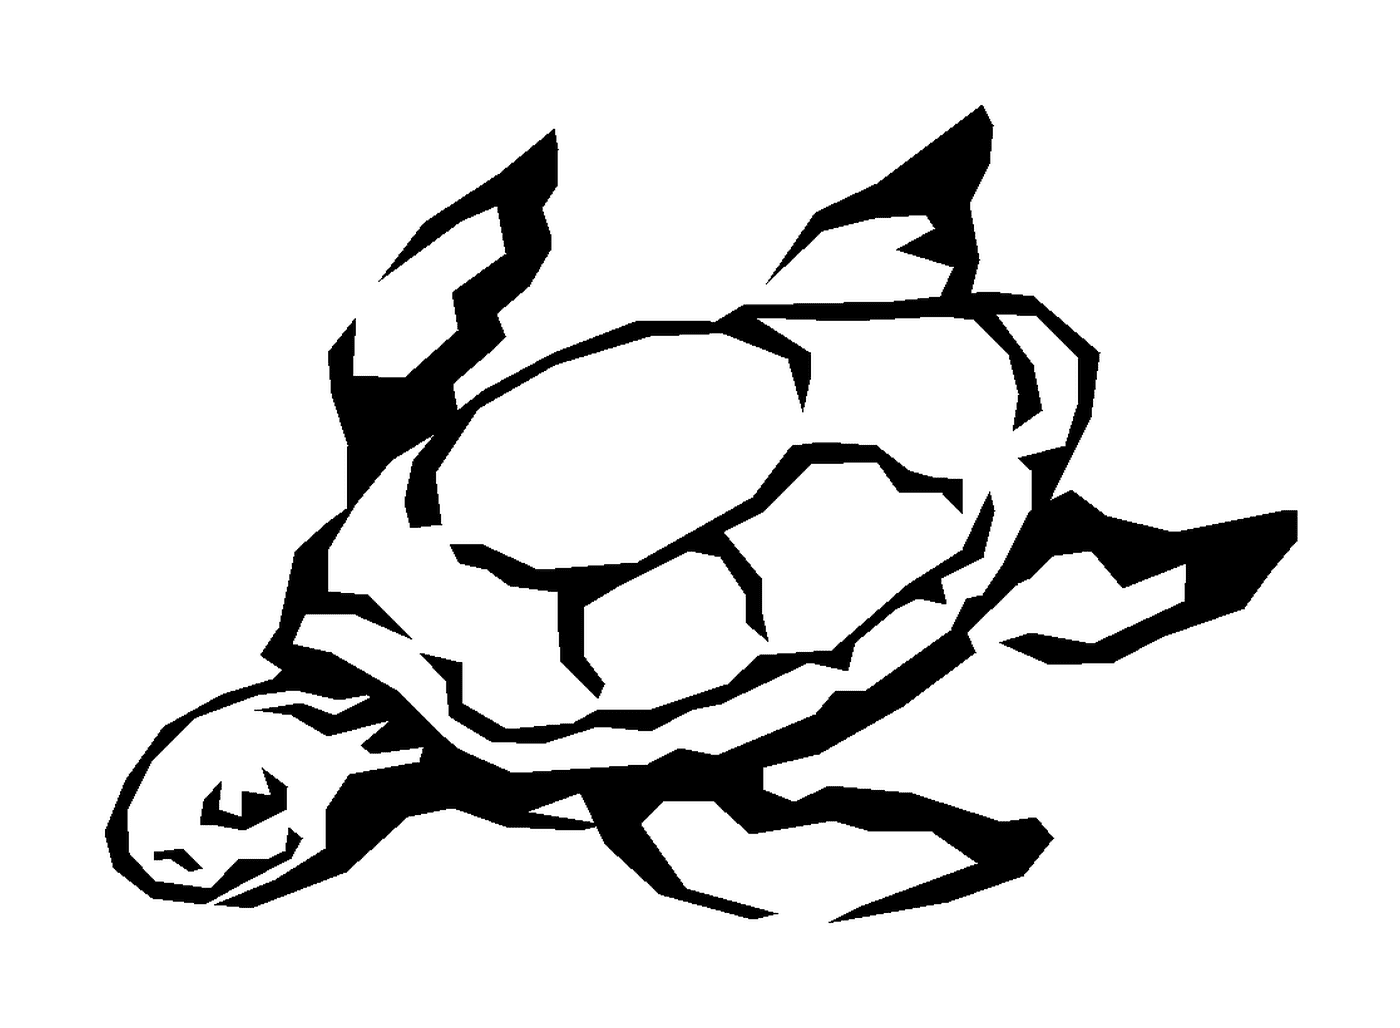  Tartaruga marinha 2 